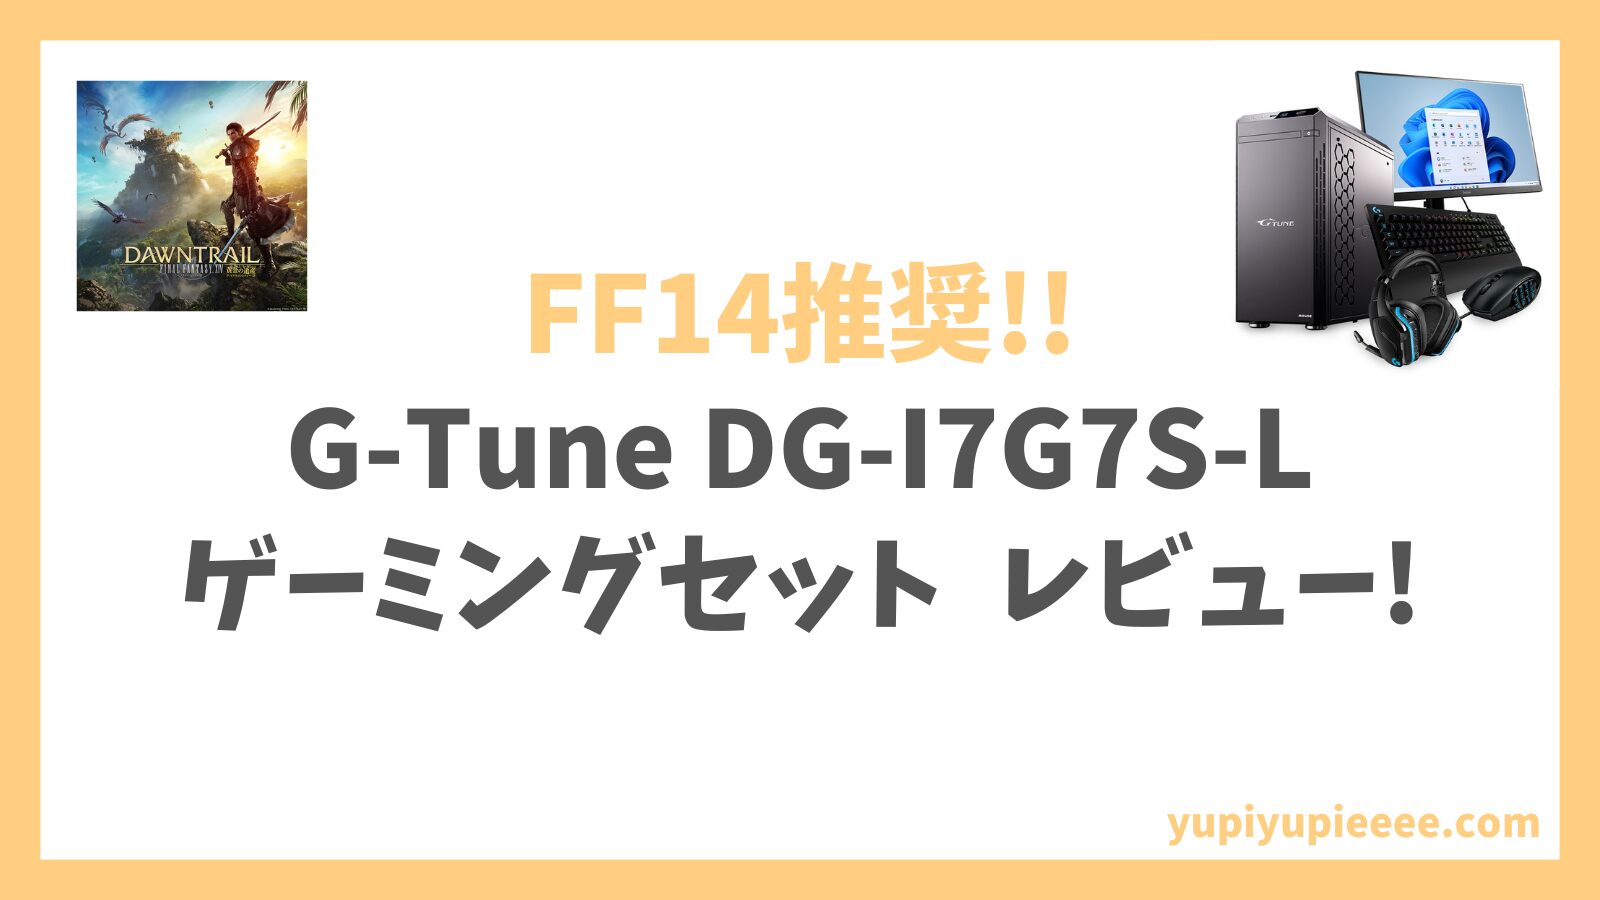 G-Tune DG-I7G7S-FF14セットアイキャッチ